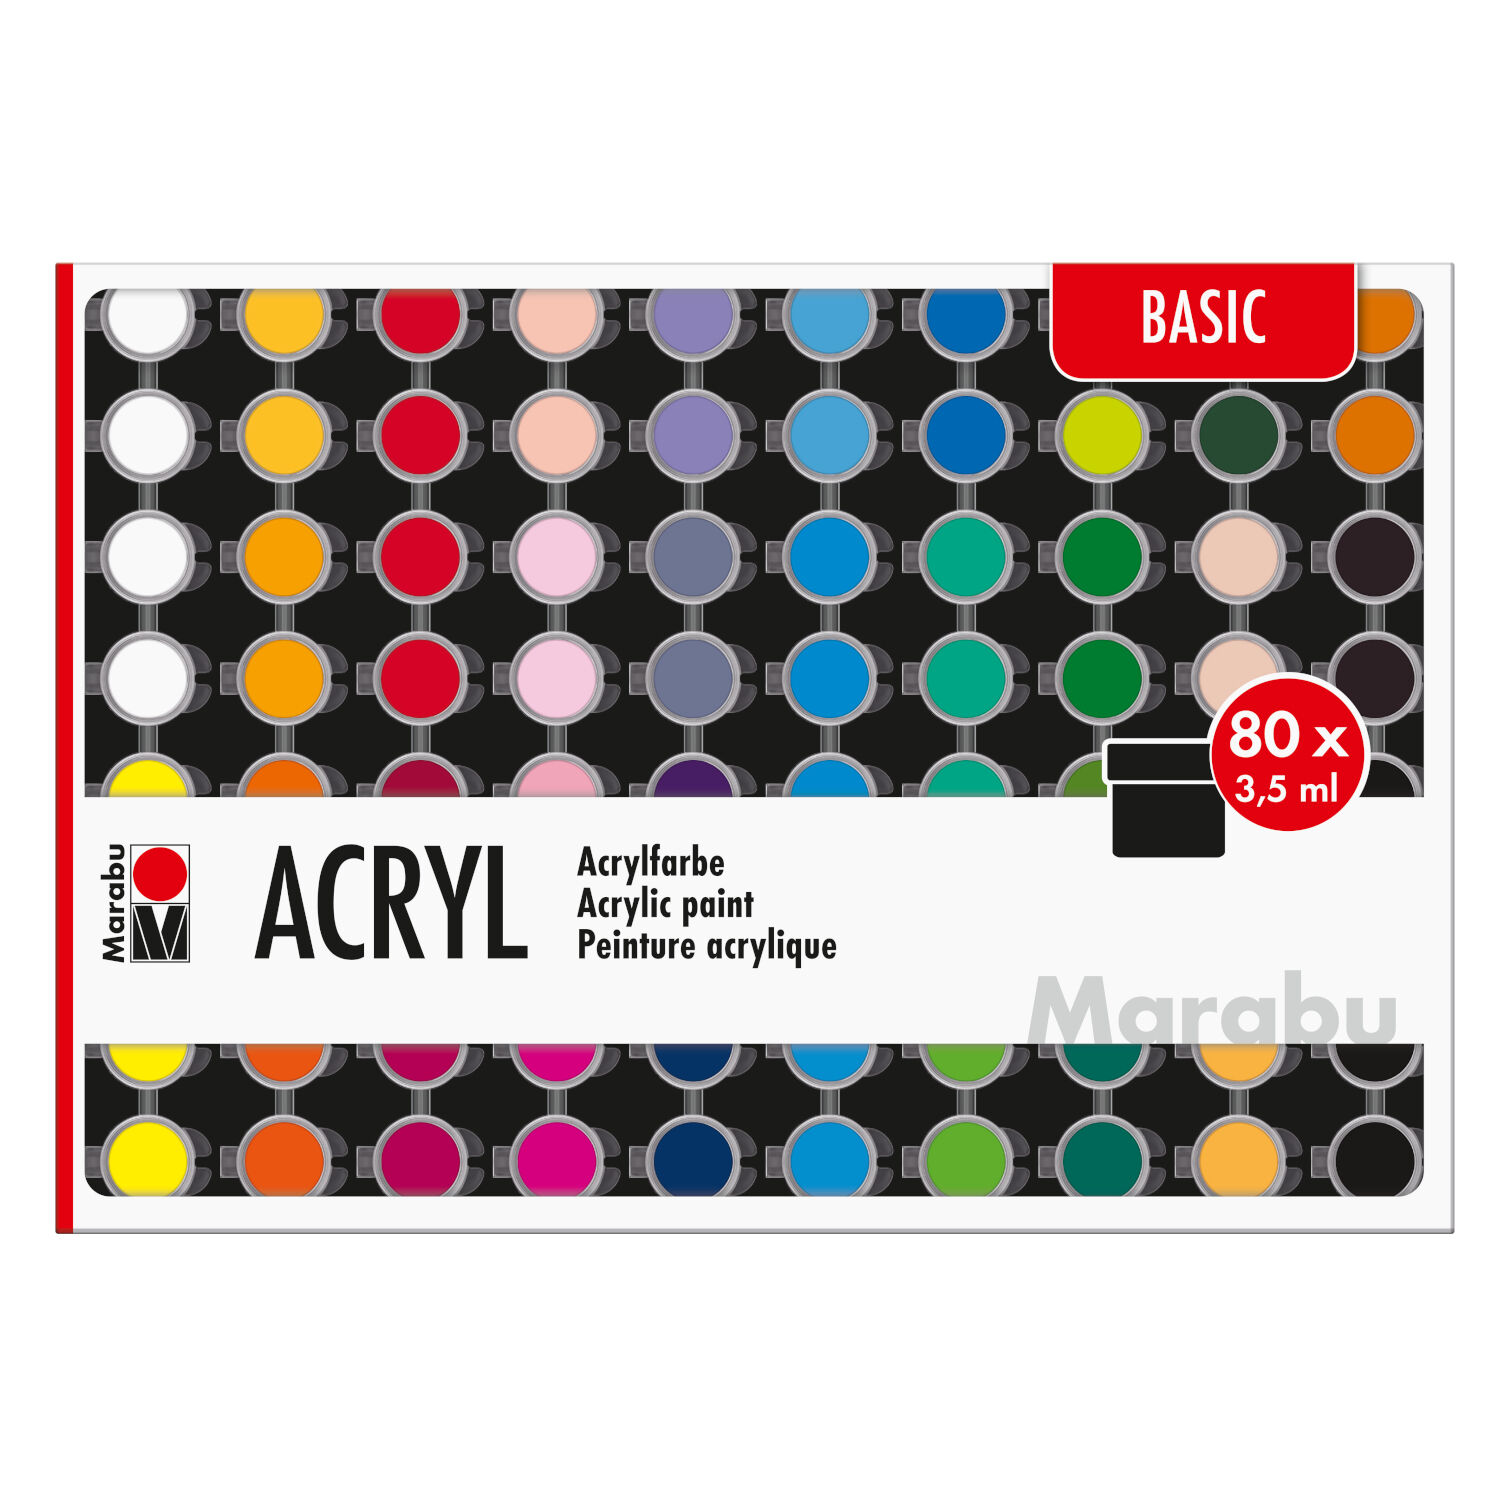 NEU Marabu Acrylfarben-Set BASIC, 80 x 3,5 ml